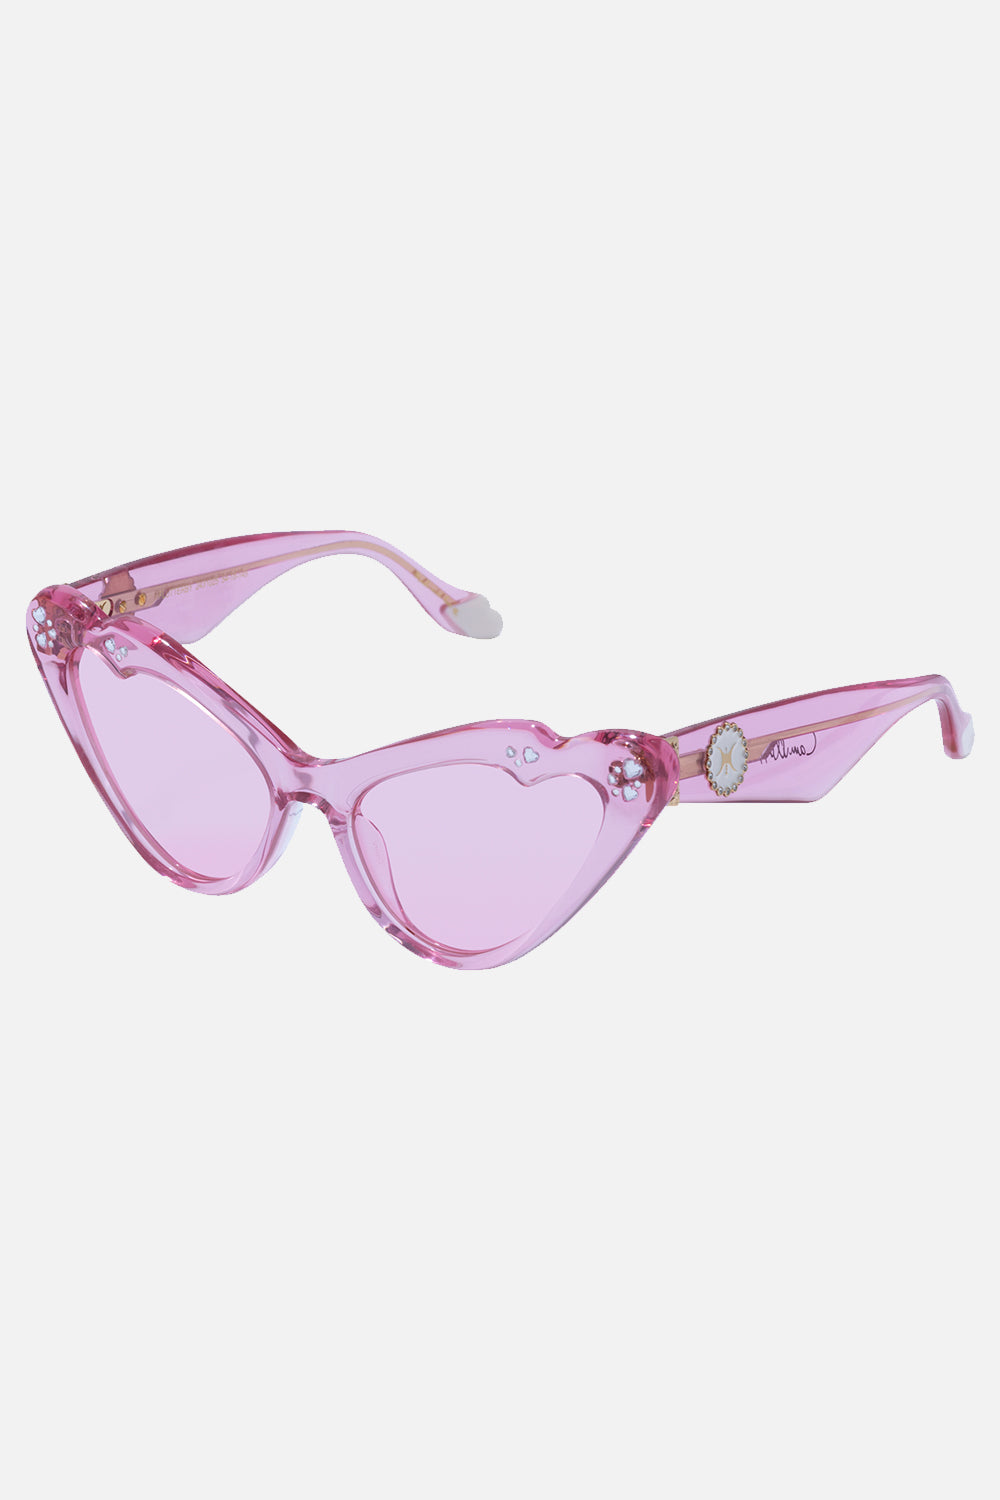 CAMILLA designer sunglasses in pink Flutterby 